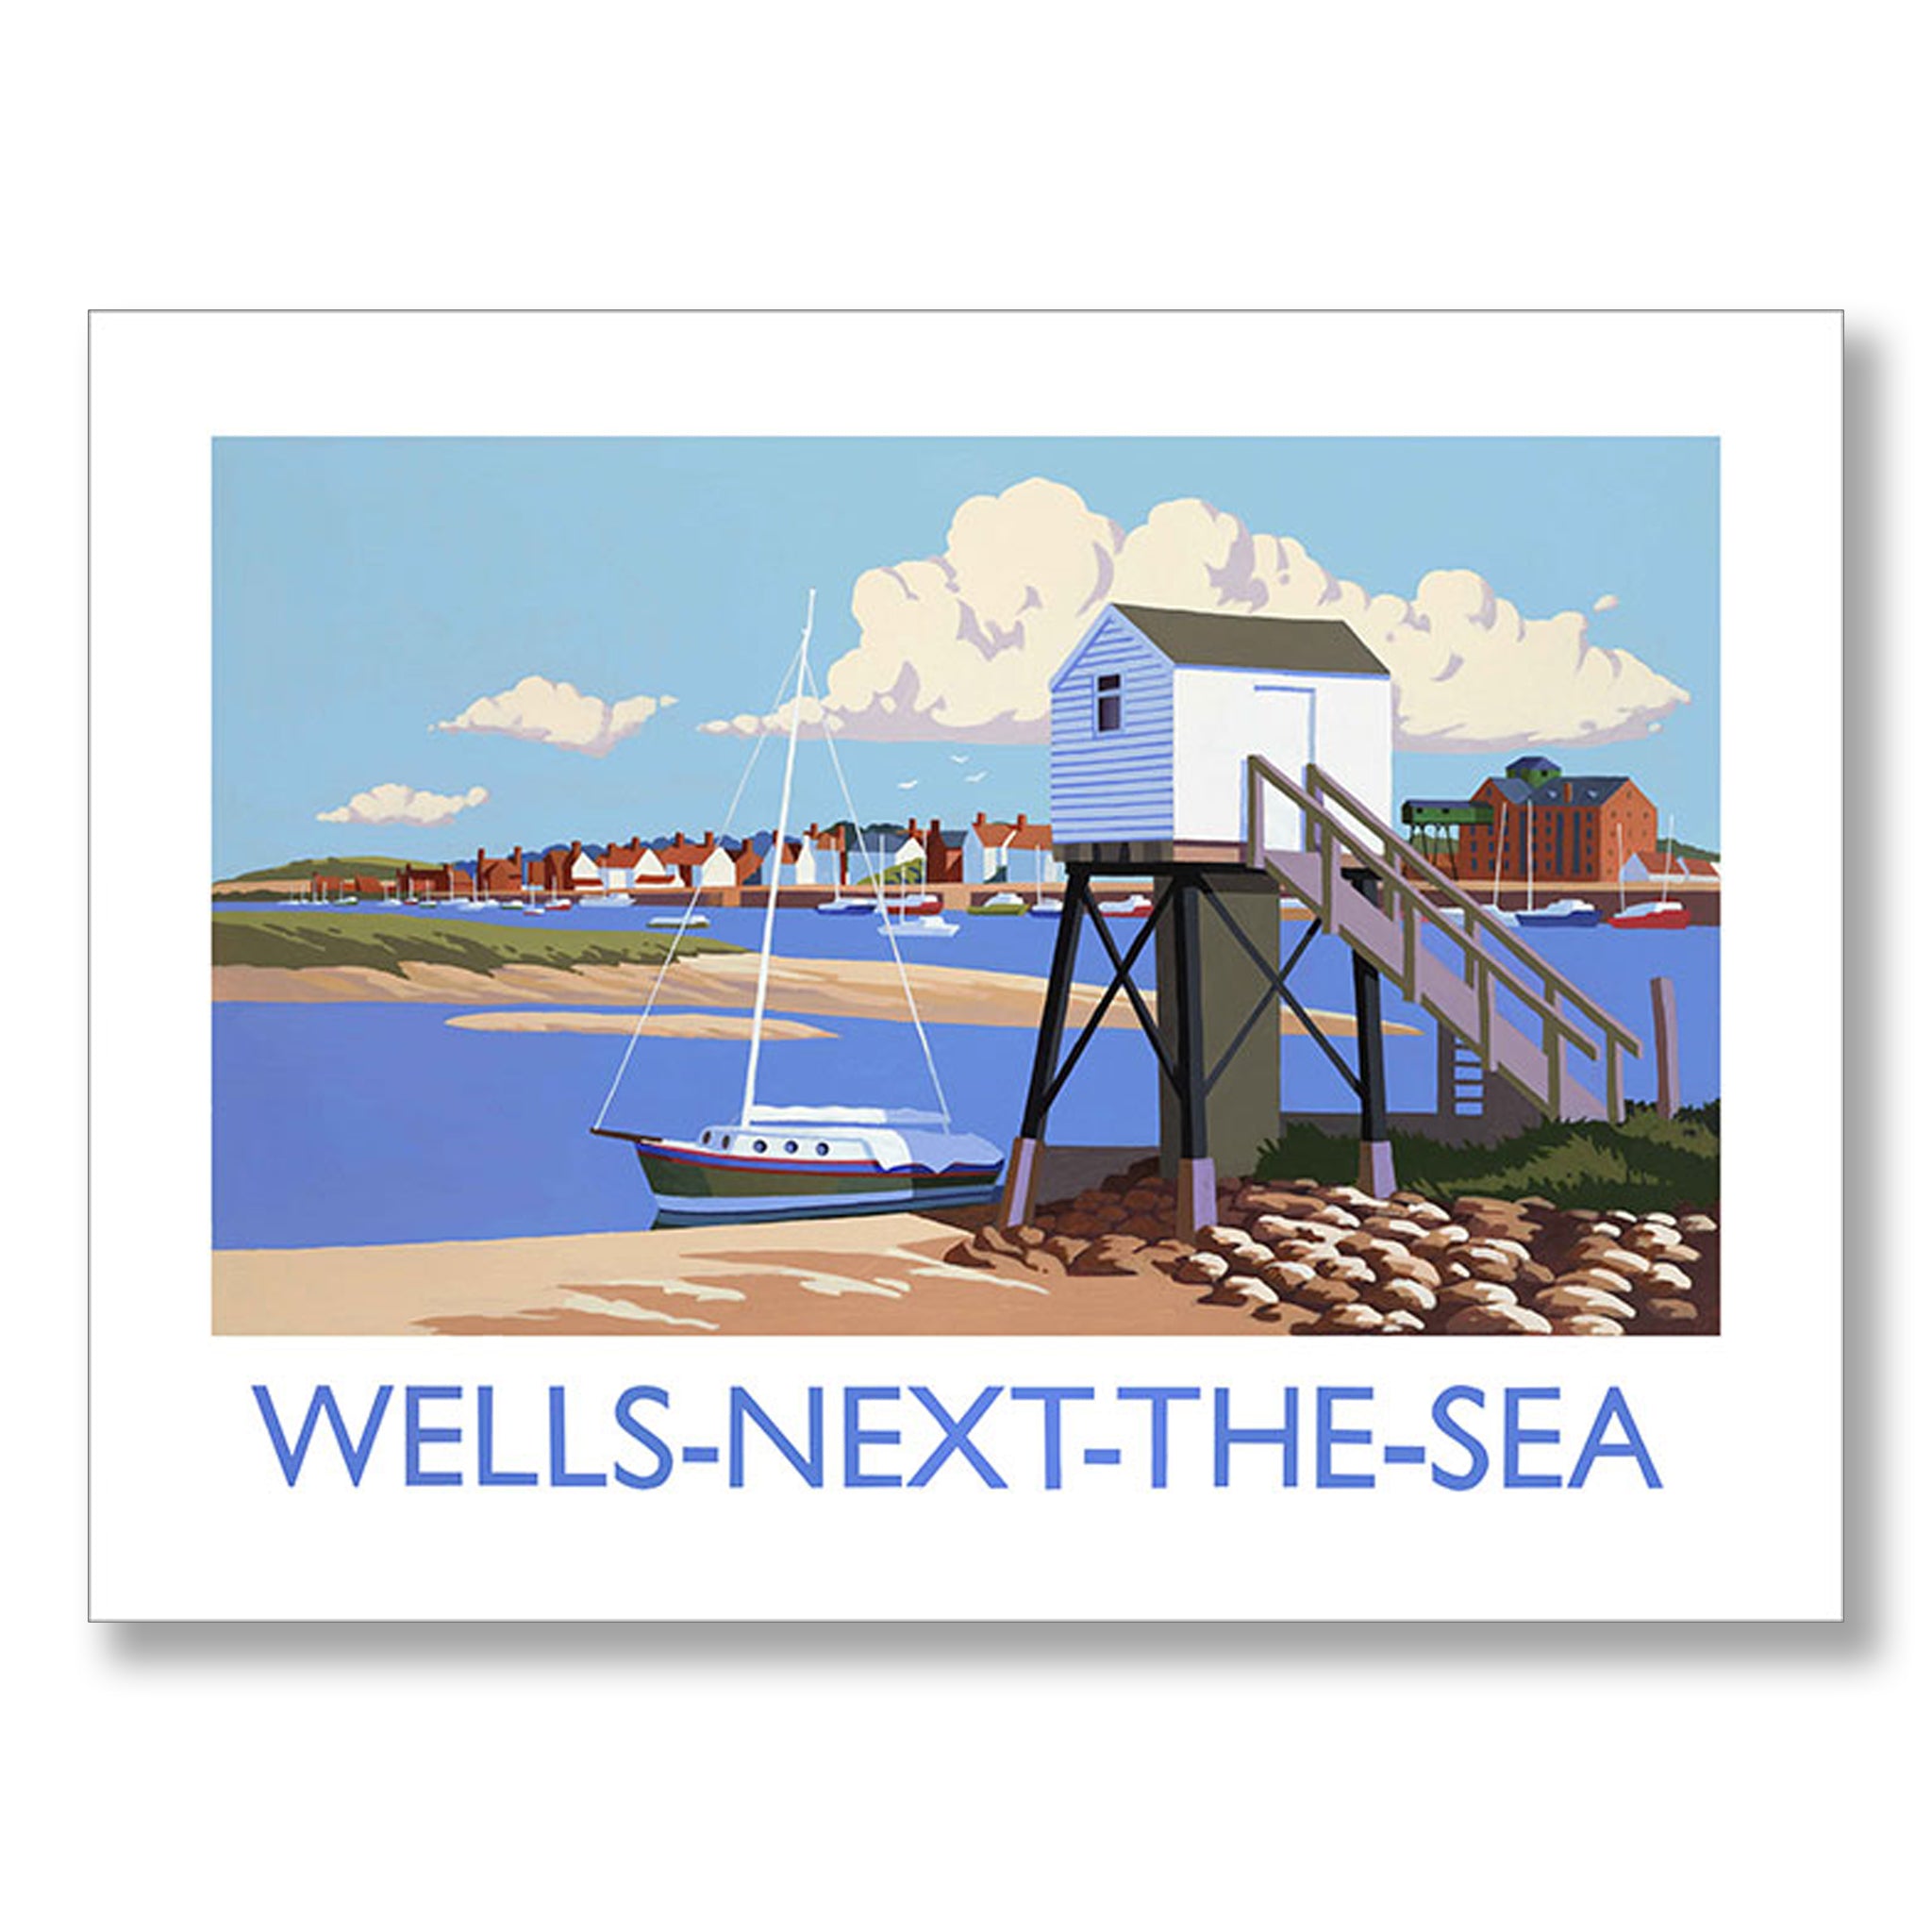 Wells-Next-The-Sea by David Kirk